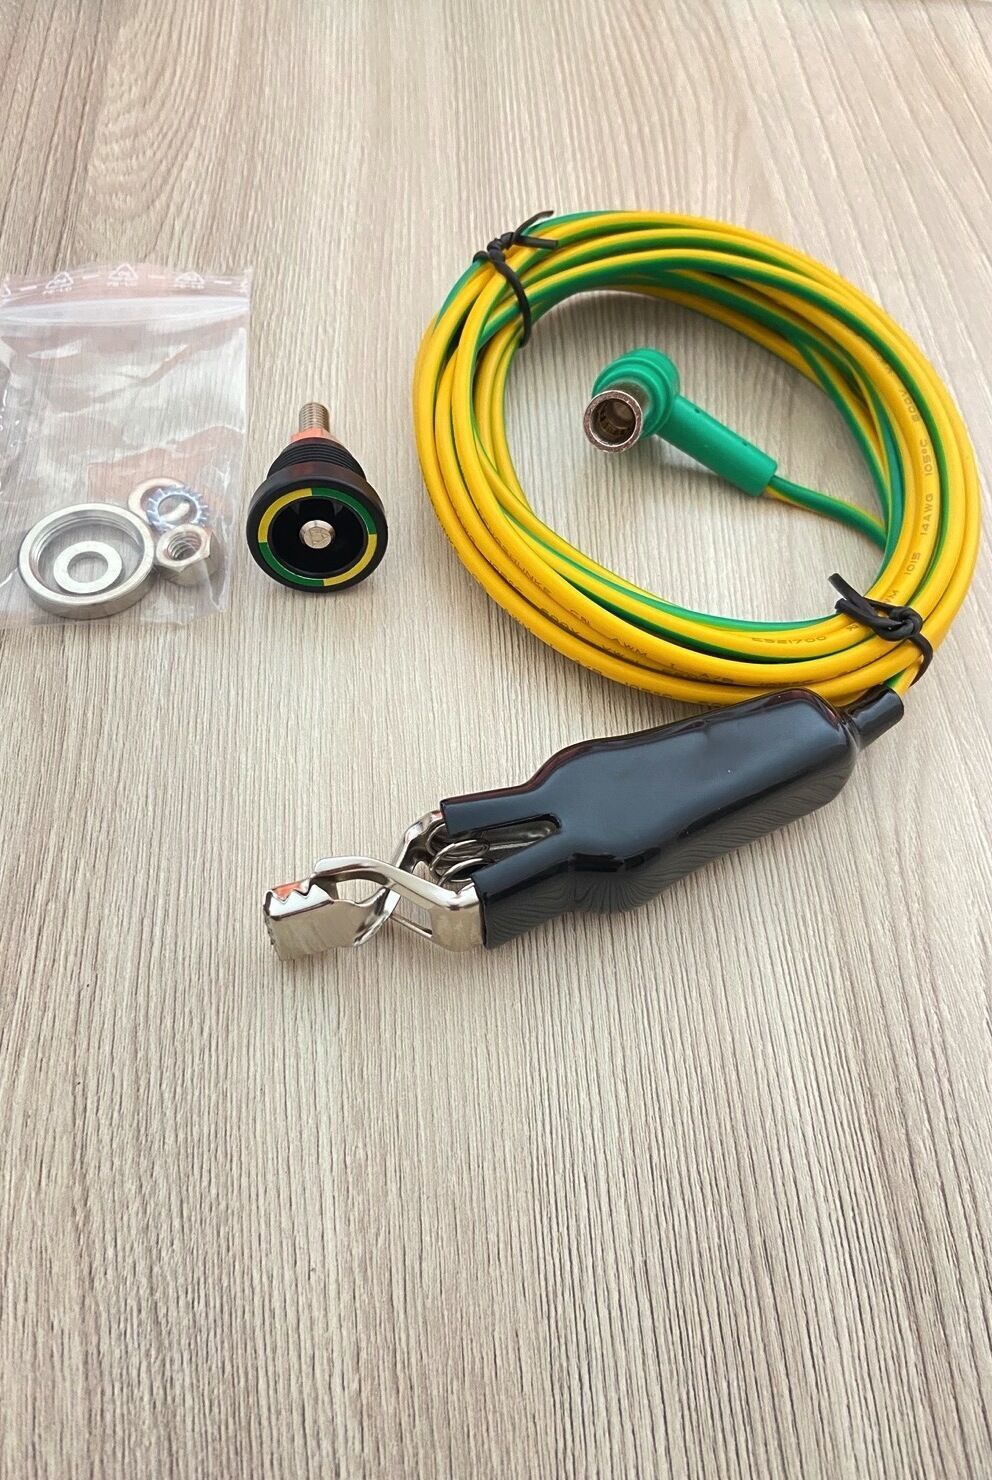 Medical equipotential grounding plug & cable_ชุดสายและปลั๊กเสียบระบบสายกราวด์เครื่องมือแพทย์